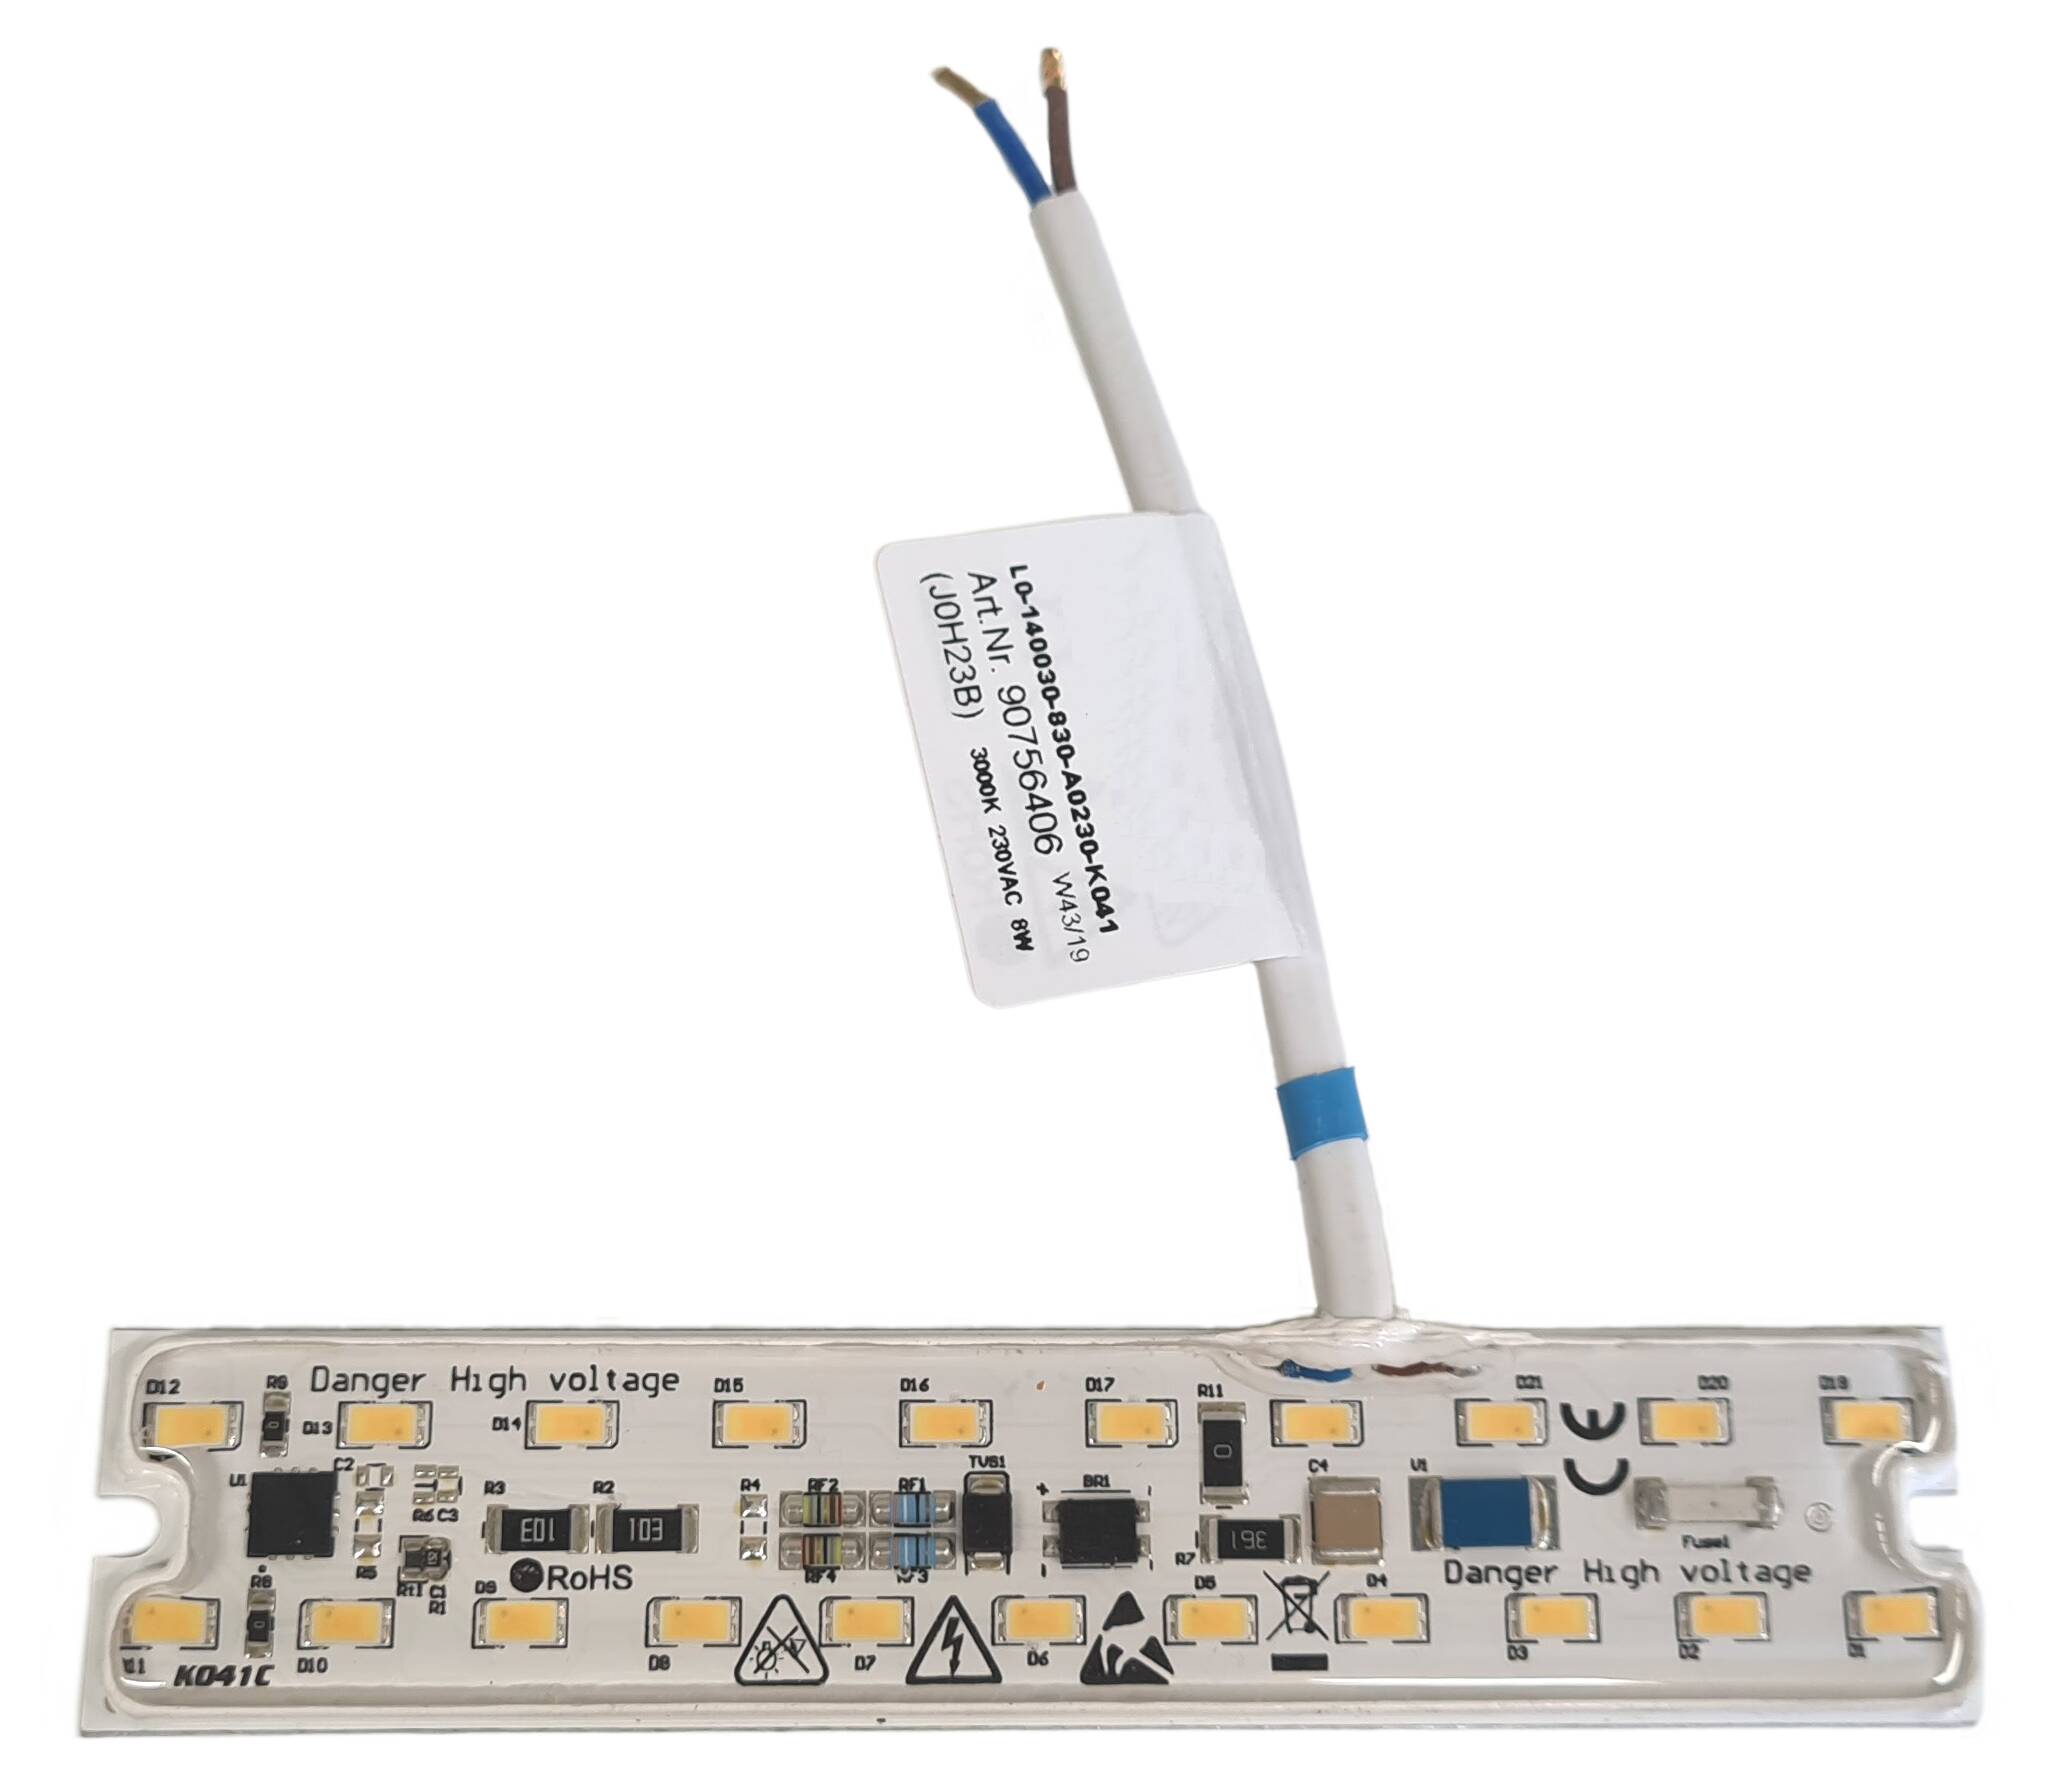 LED-Modul 127x60 mm tuneable white 24V/DC 14W 2700-5000K CRI>85 1400lm m. 2 Tastern